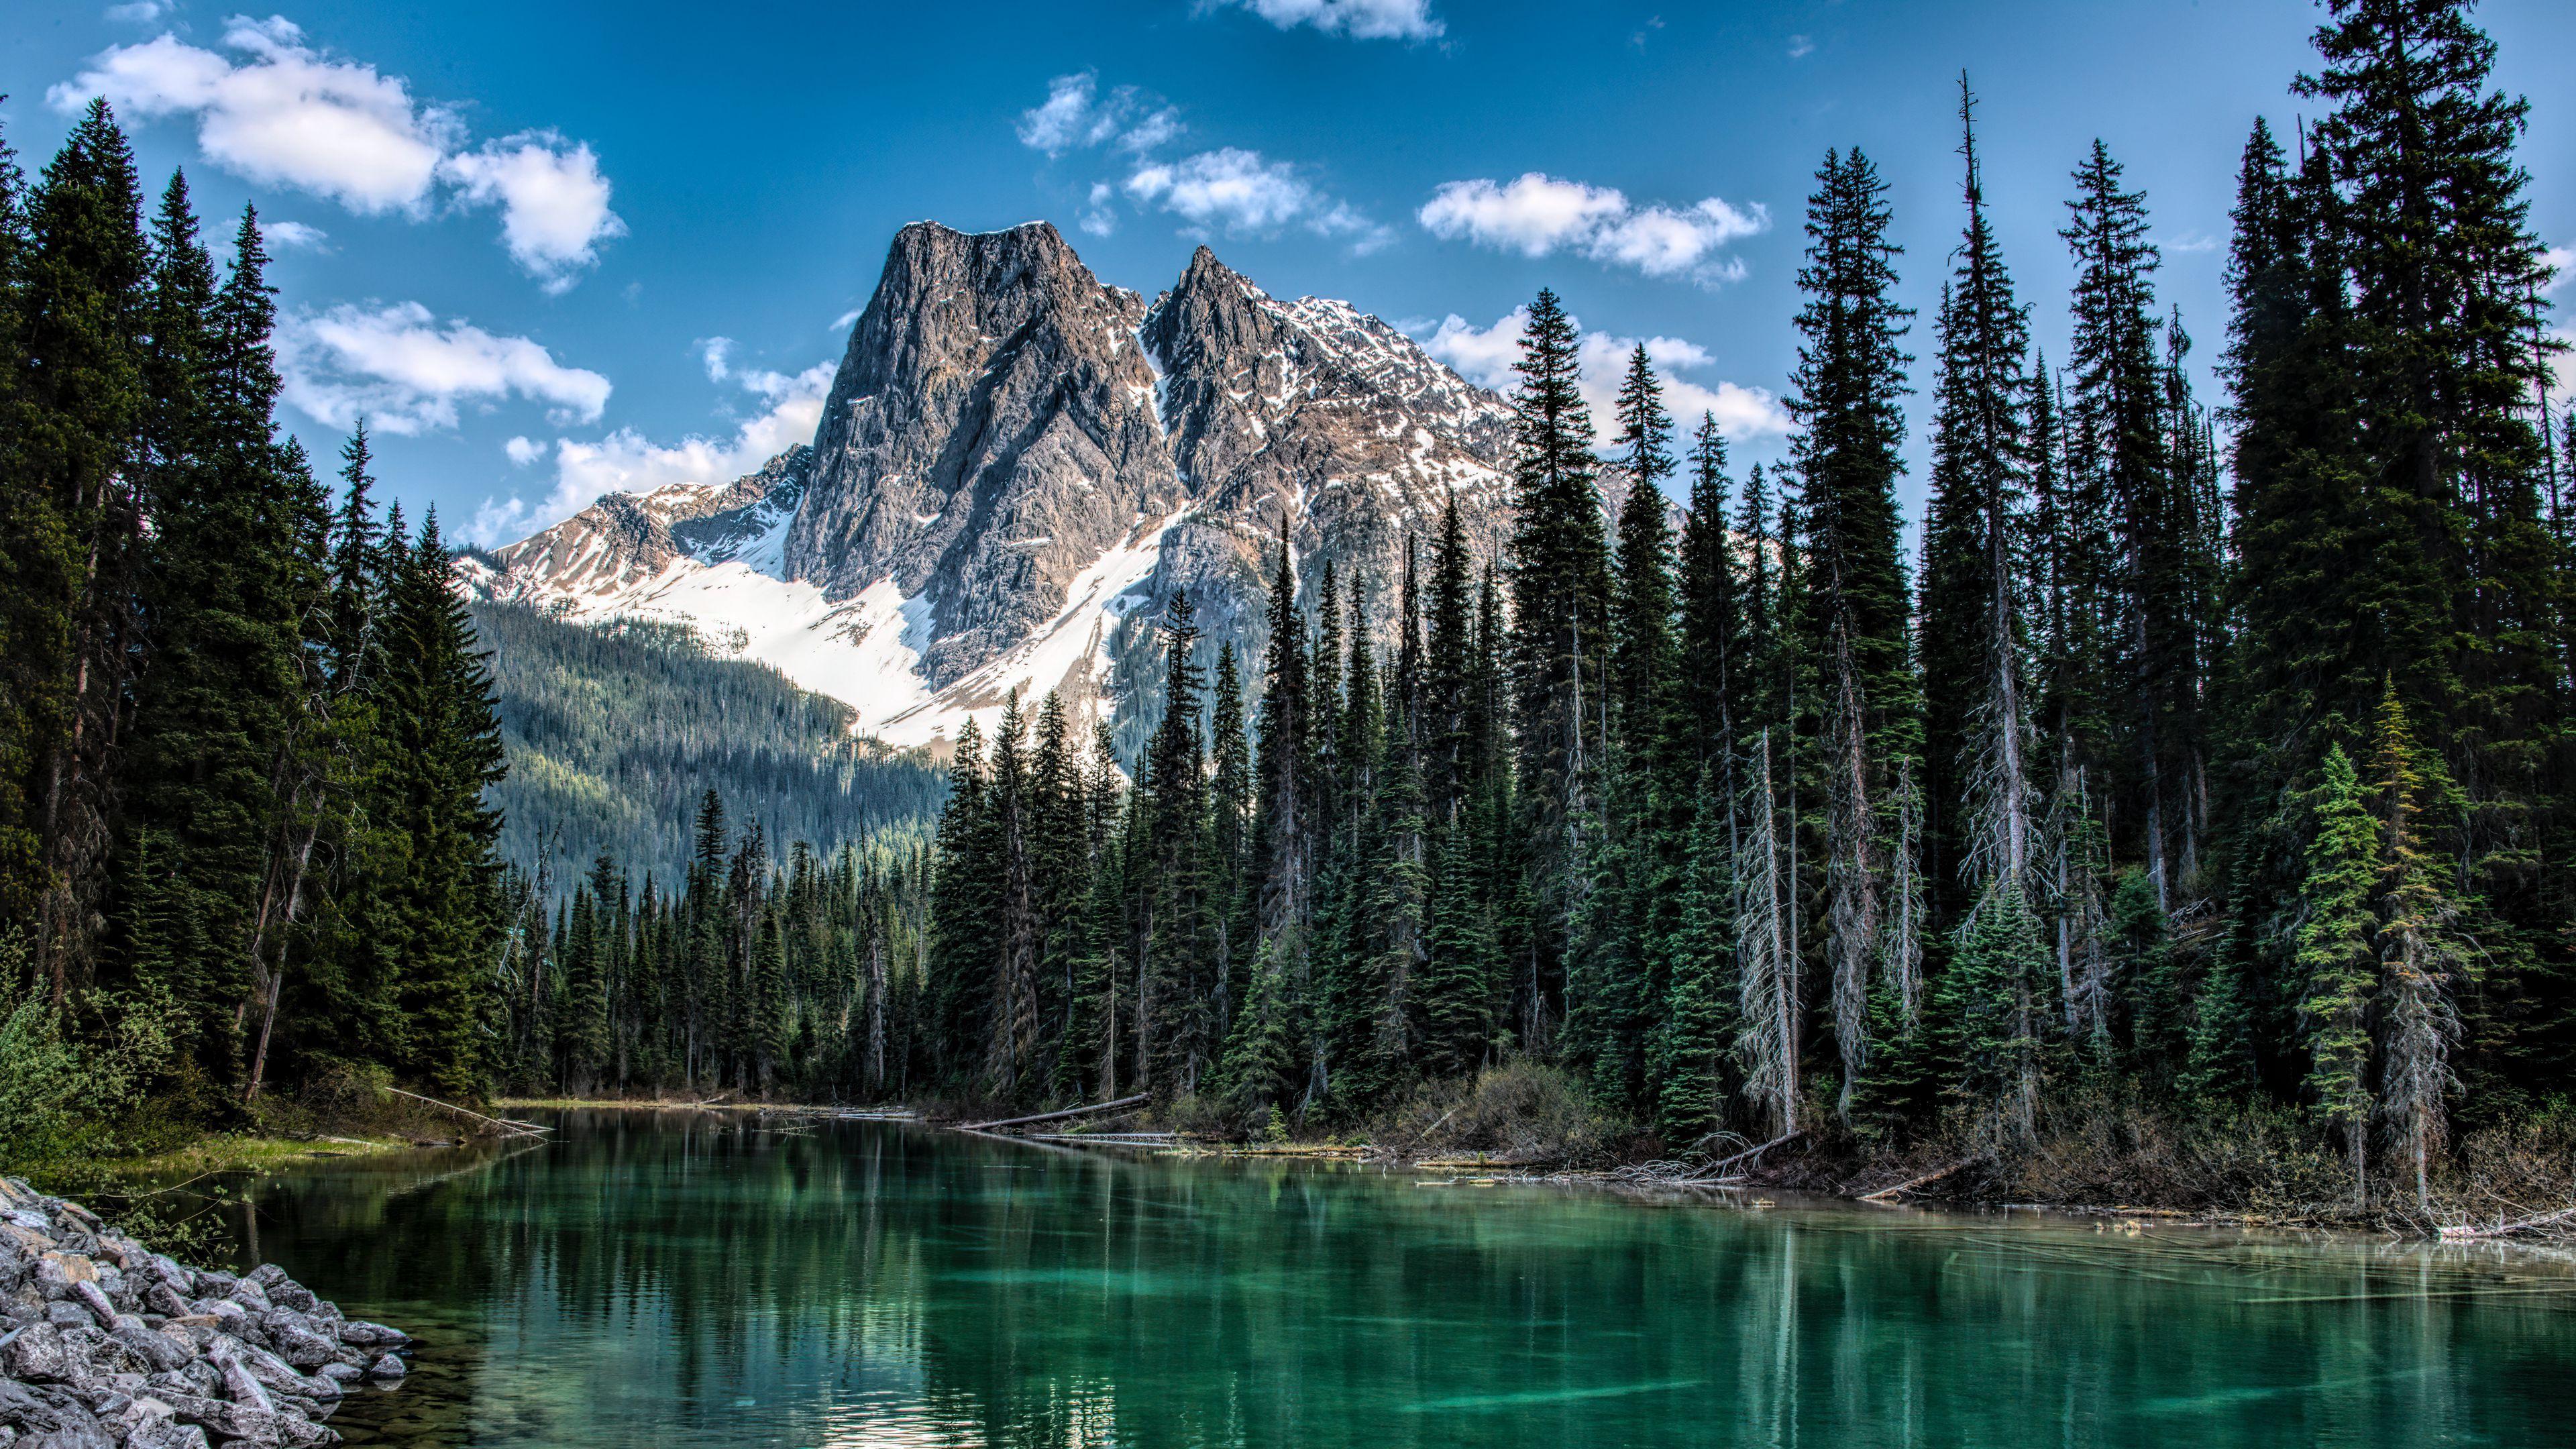 4K Mountain River Wallpapers  Top Free 4K Mountain River Backgrounds   WallpaperAccess